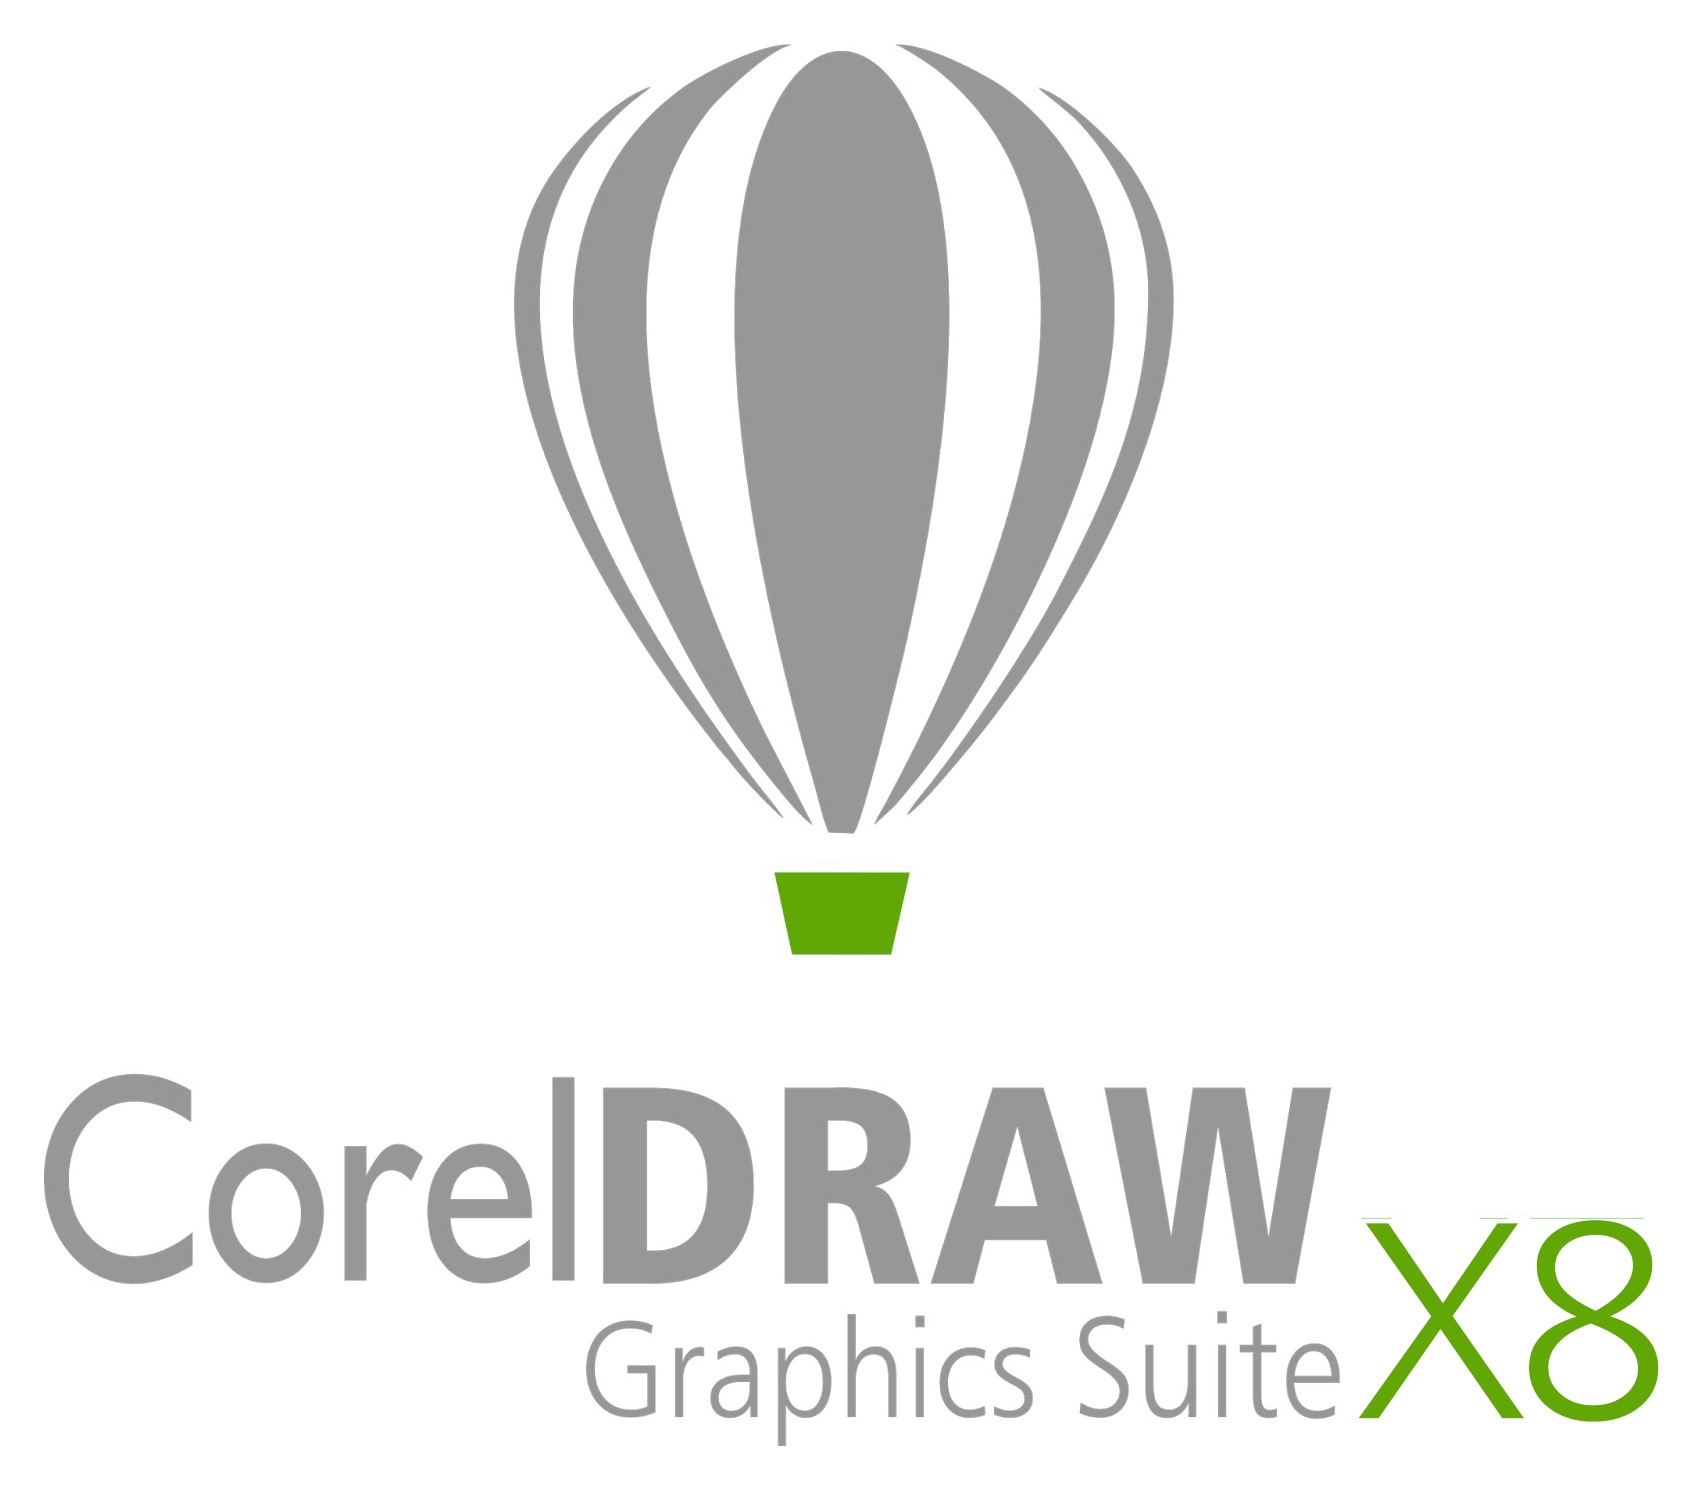 CorelDraw_Graphics_Suite_X8_logo_emblem_2